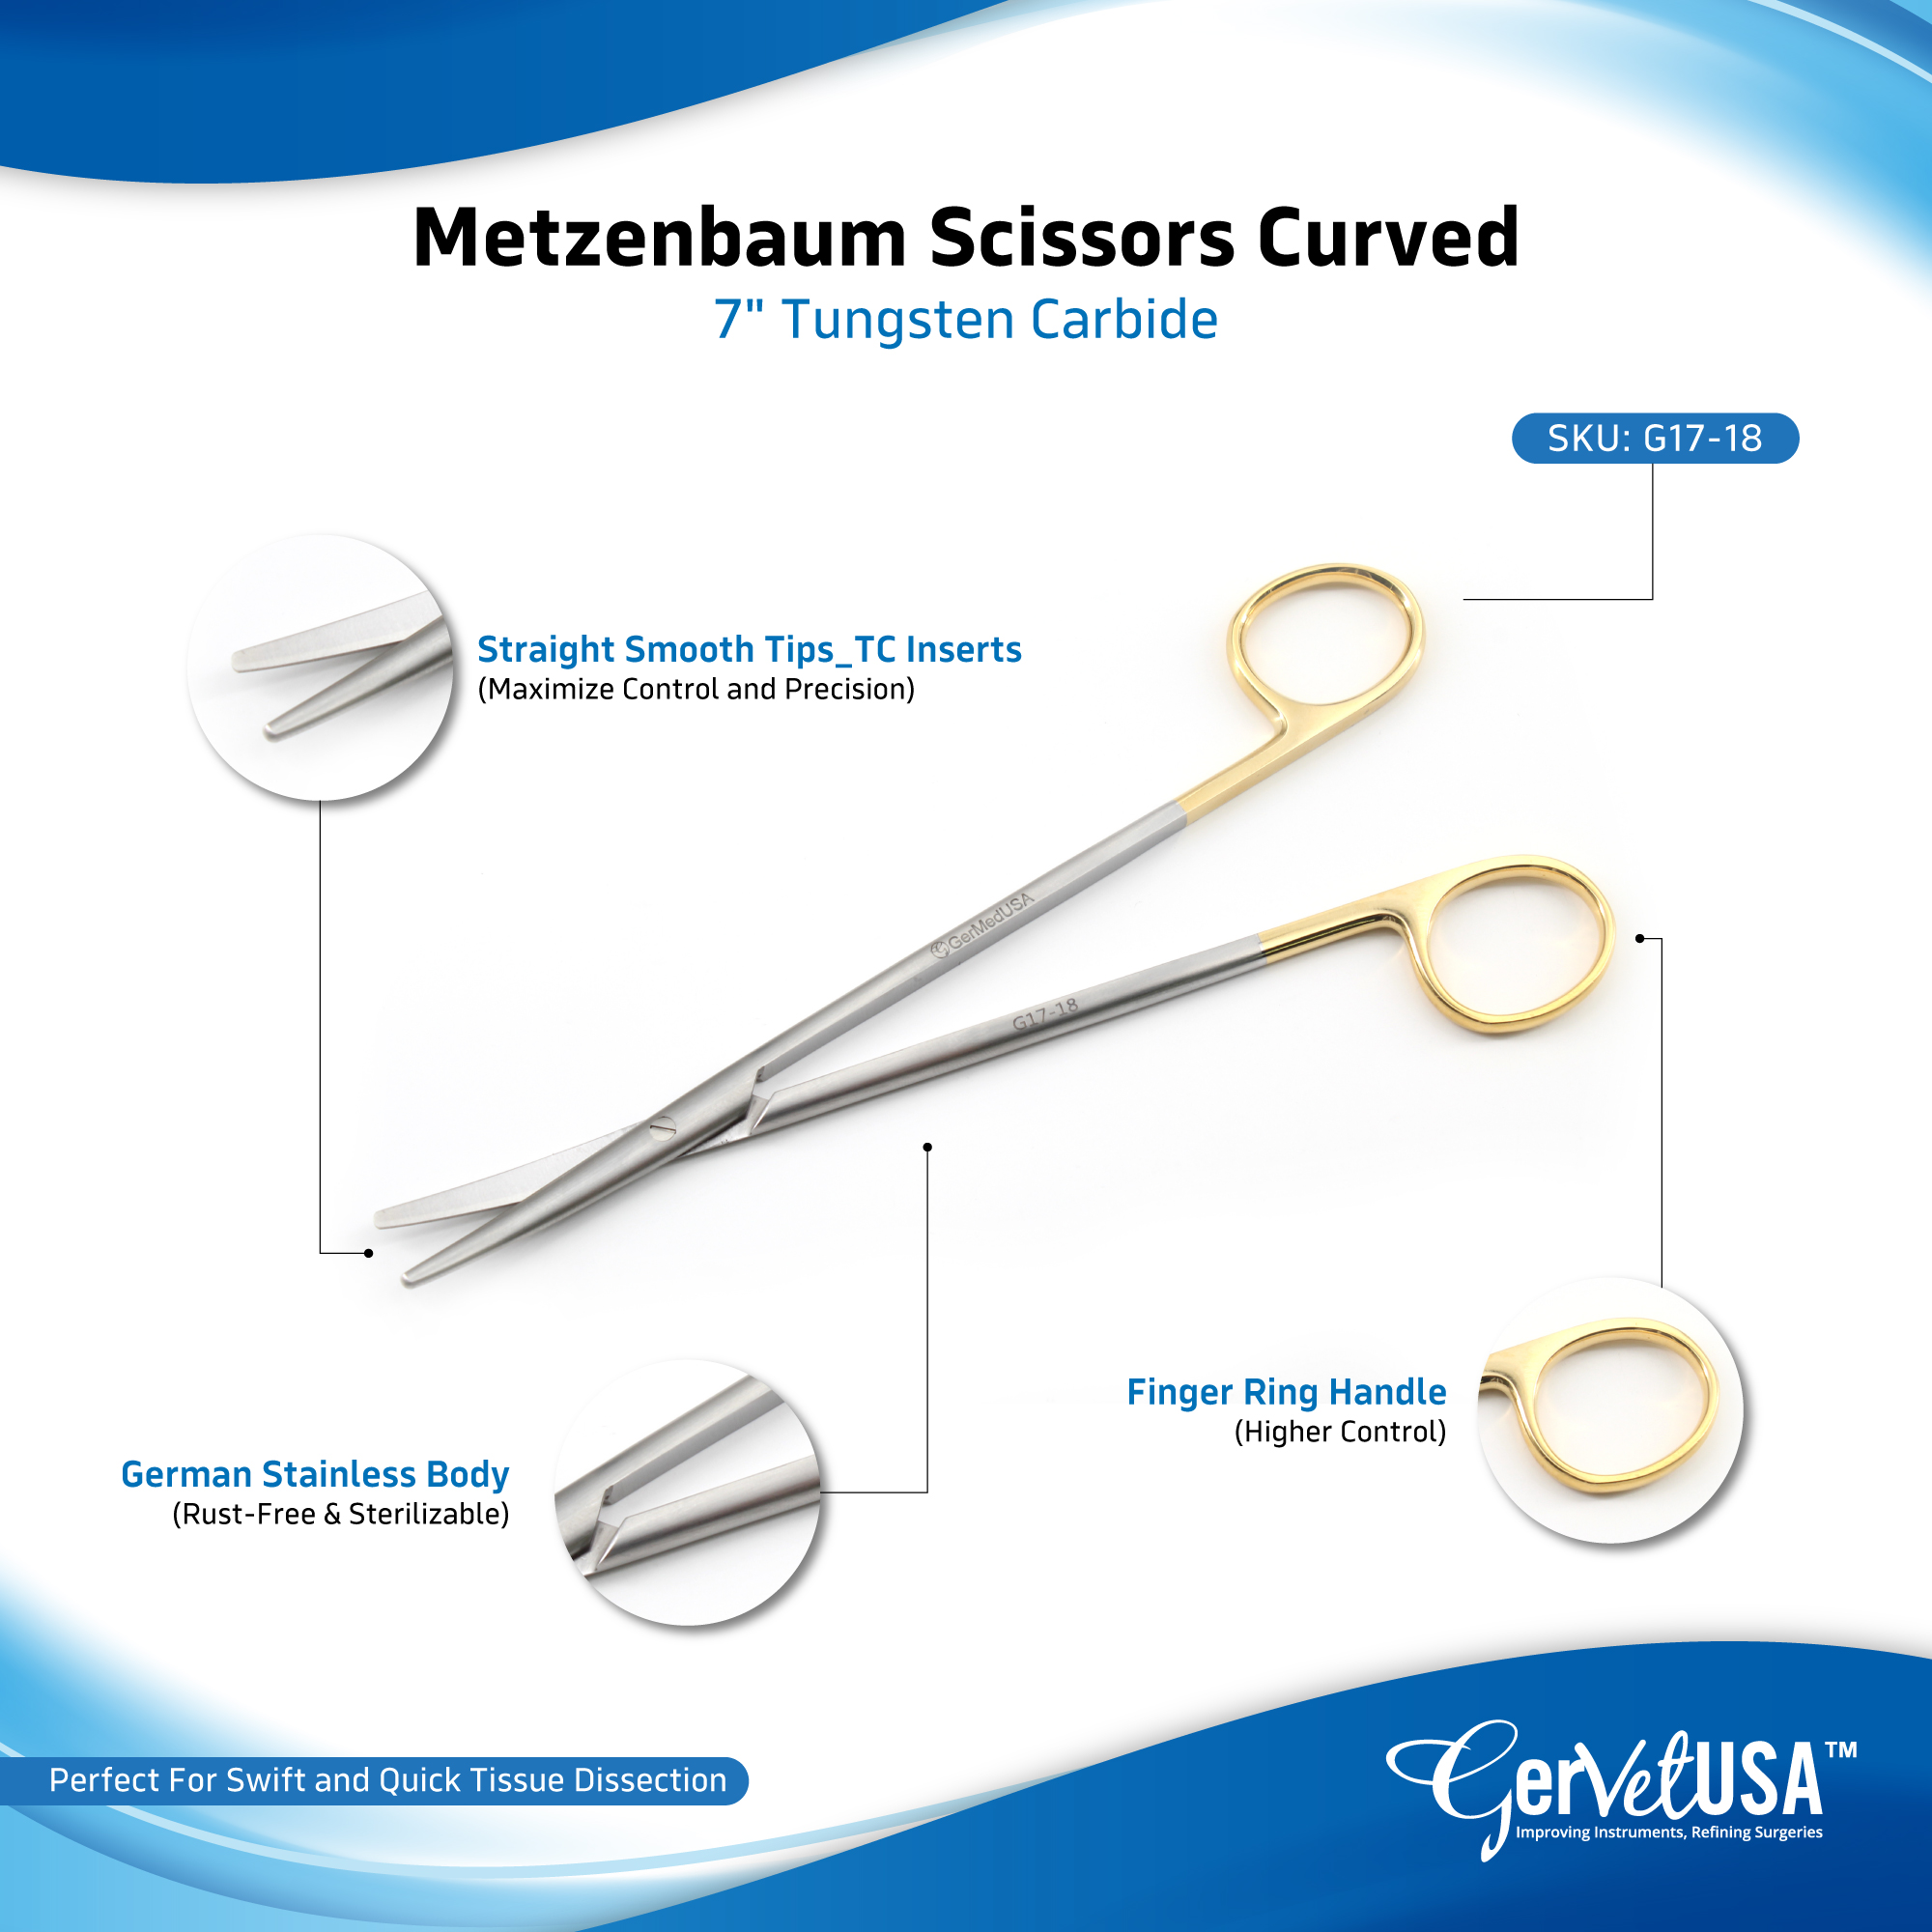 Metzenbaum Scissors - Curved, Light Pattern - JEDMED